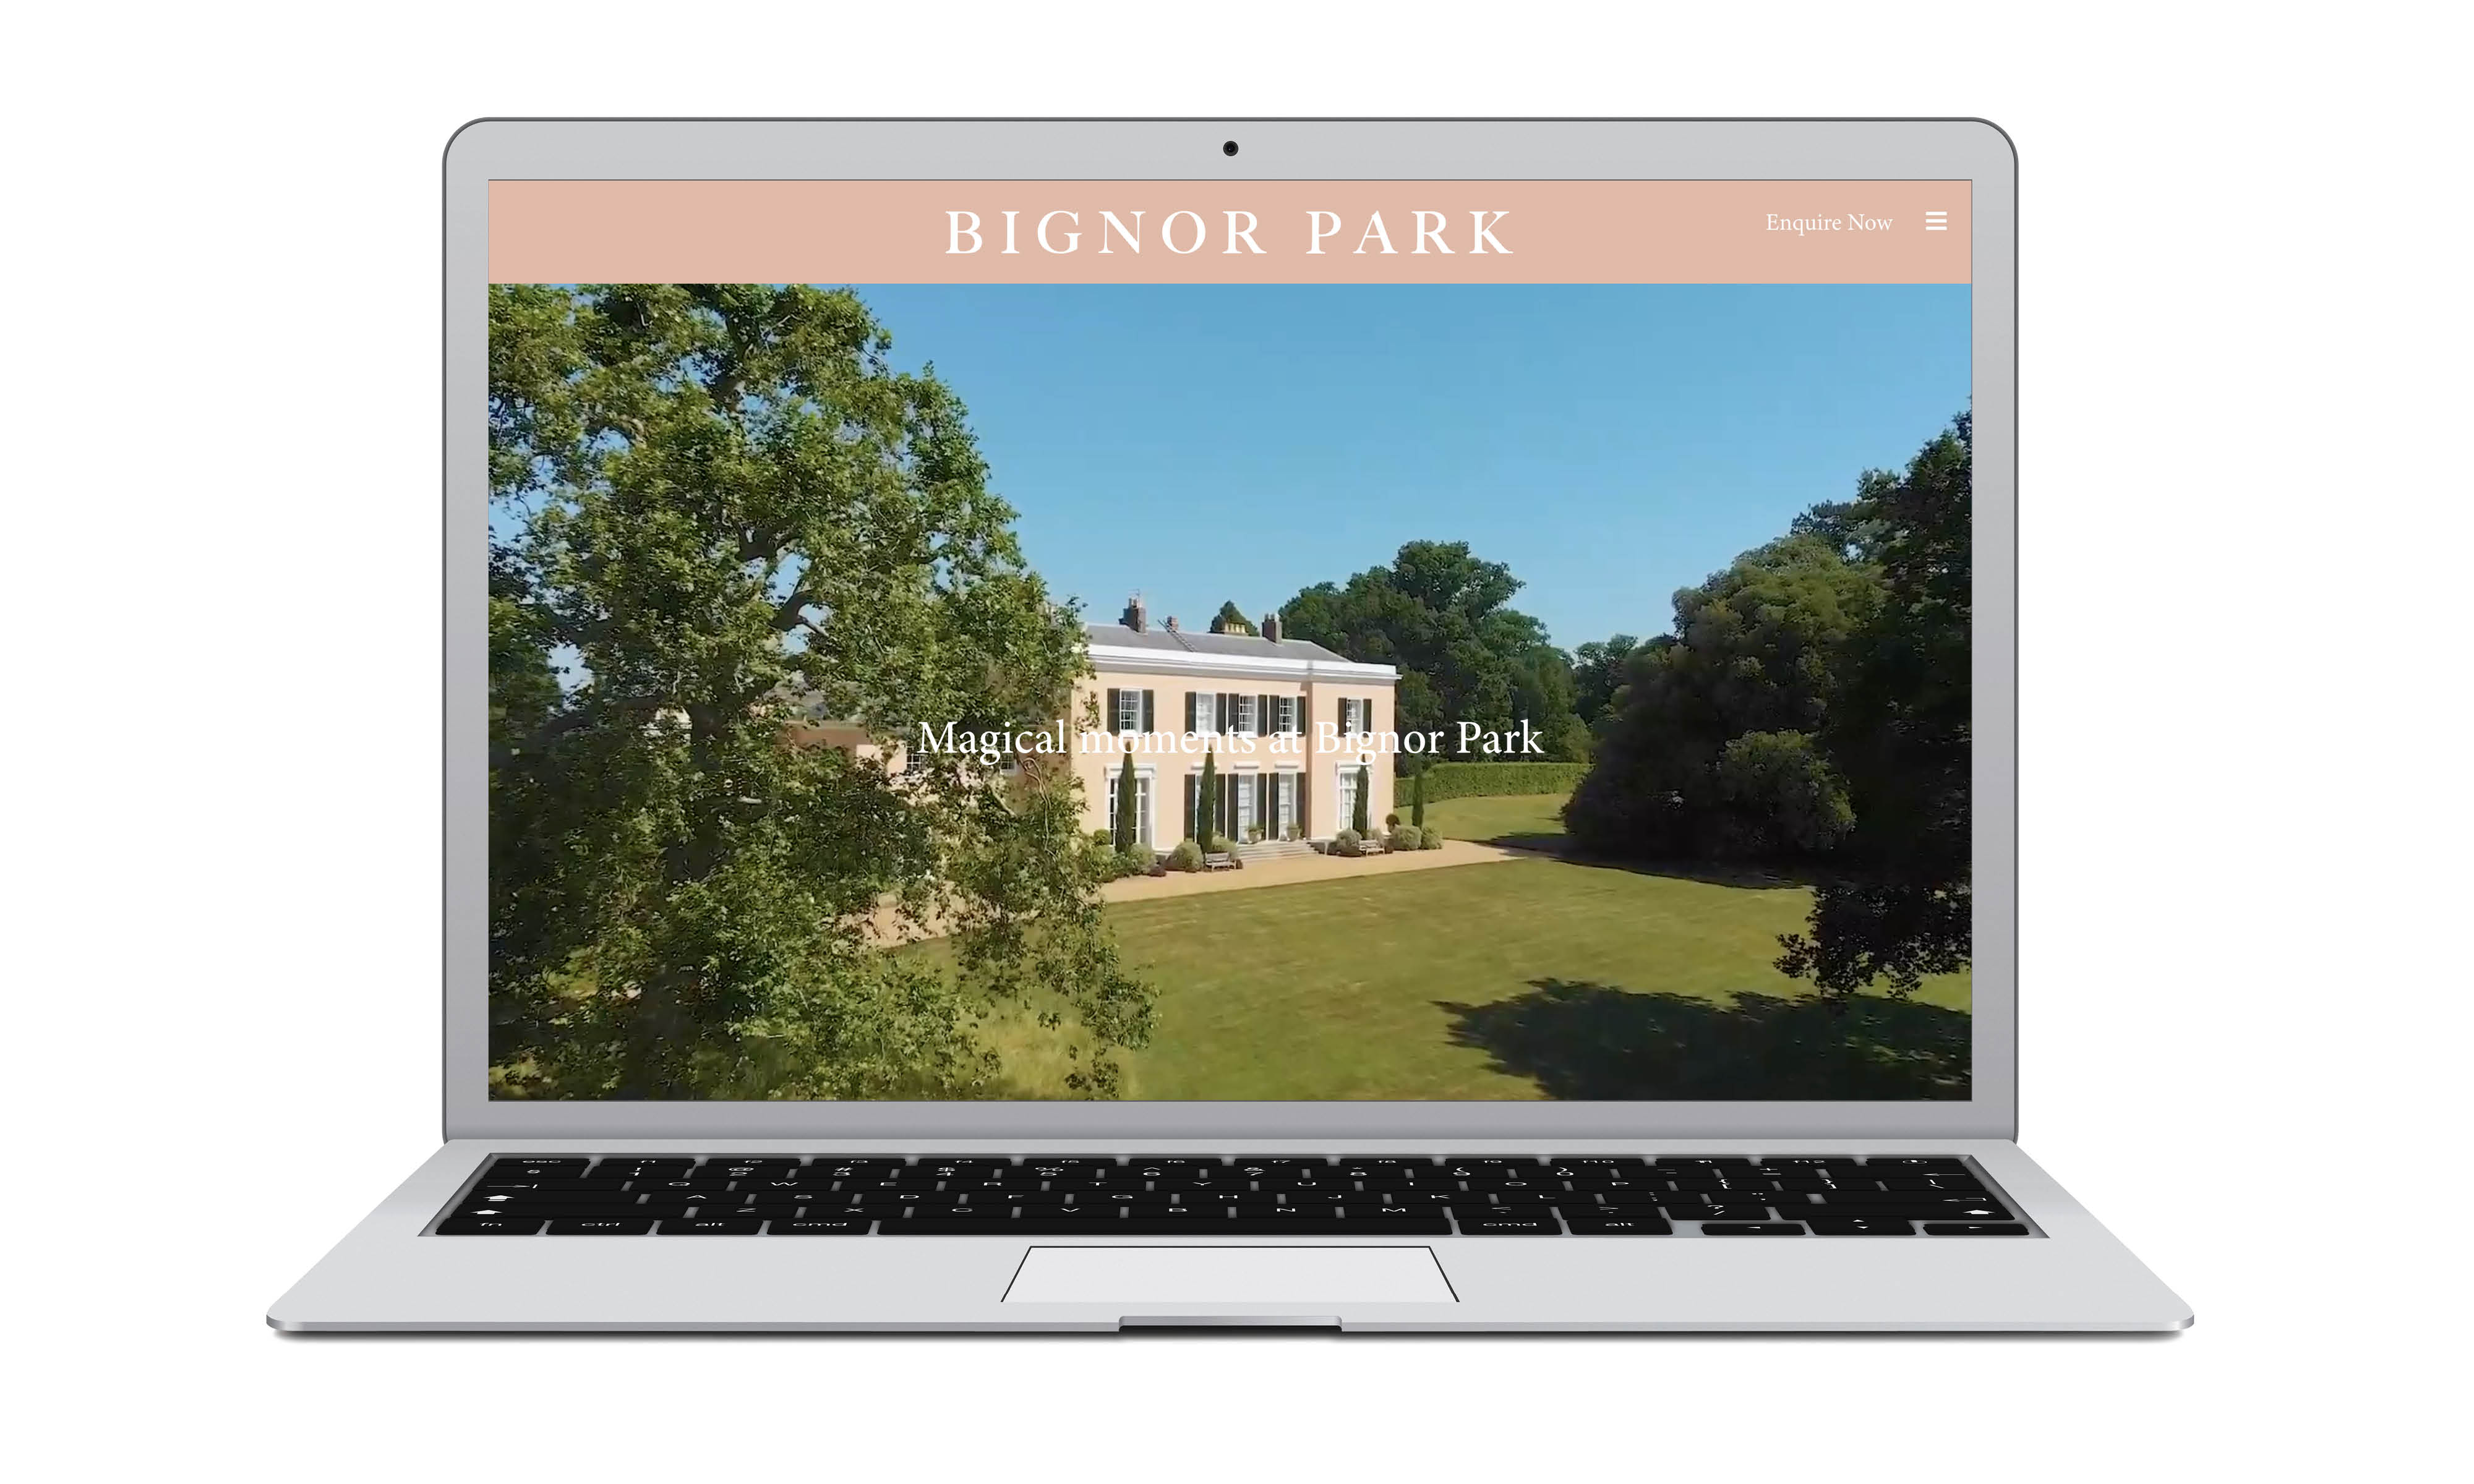 Bignor Park West Sussex website designed Neon branding consultancy5